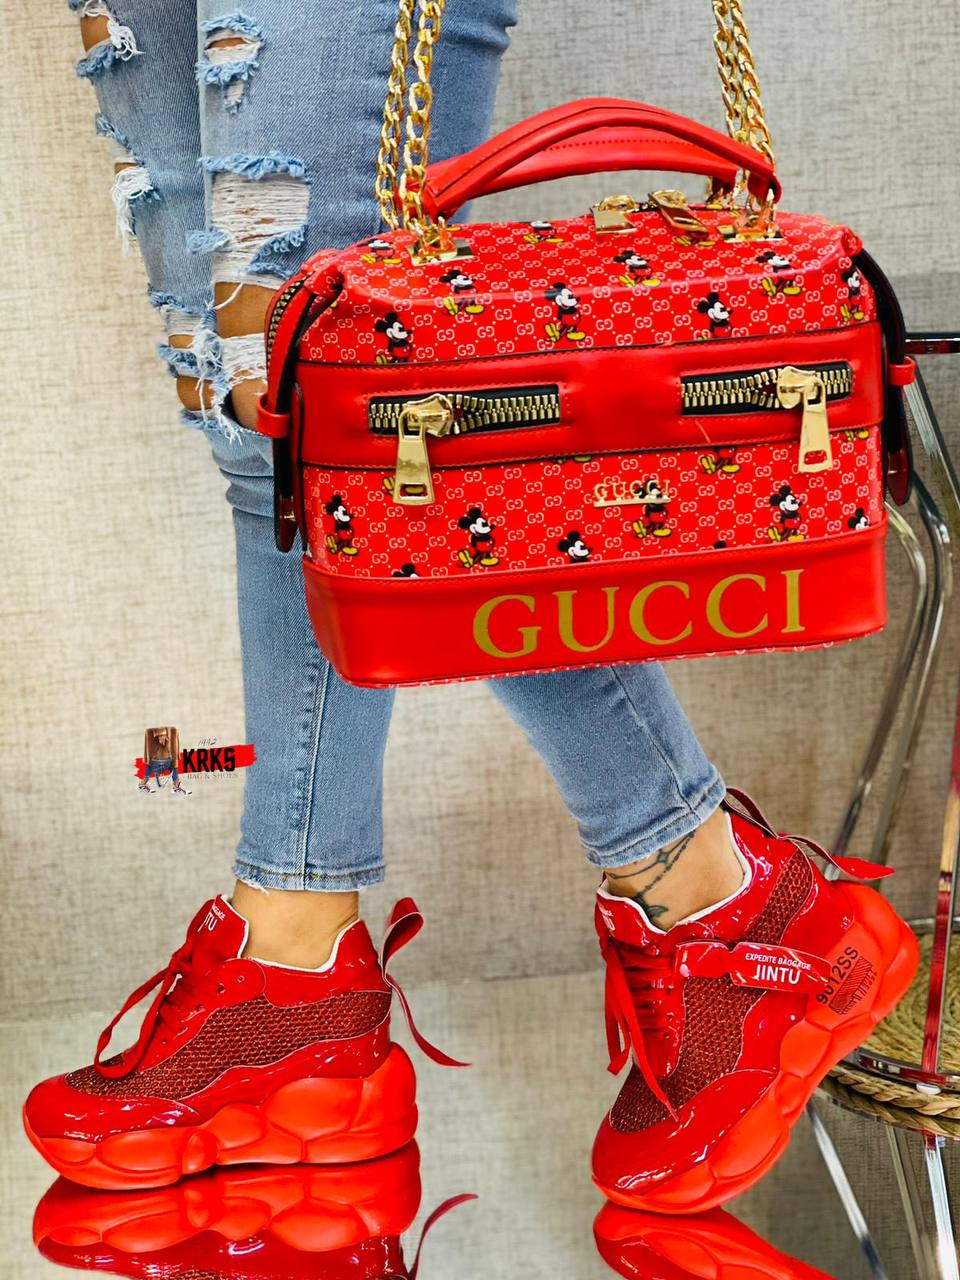 Gucci Shoe & Bag Set - Boutique | Melanin Drip Ent in Muskegon